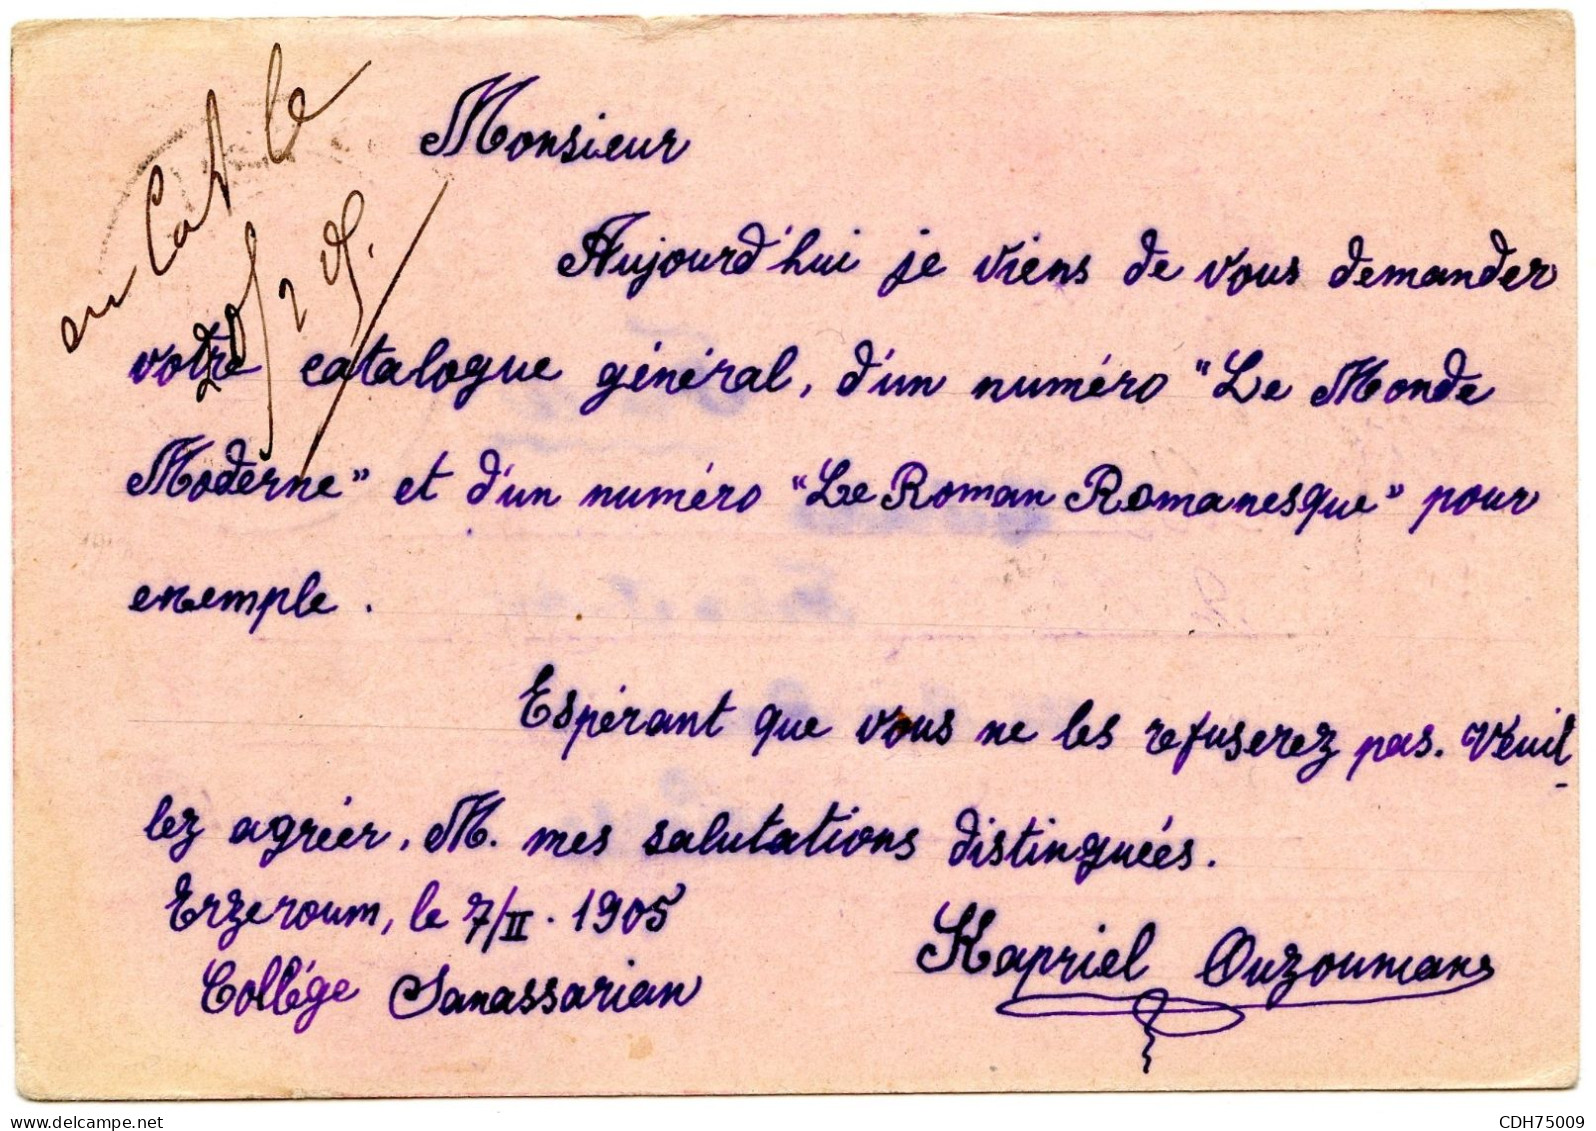 TURQUIE - ENTIER 20 P. D'ERZEROUM POUR PARIS, 1905 - Briefe U. Dokumente